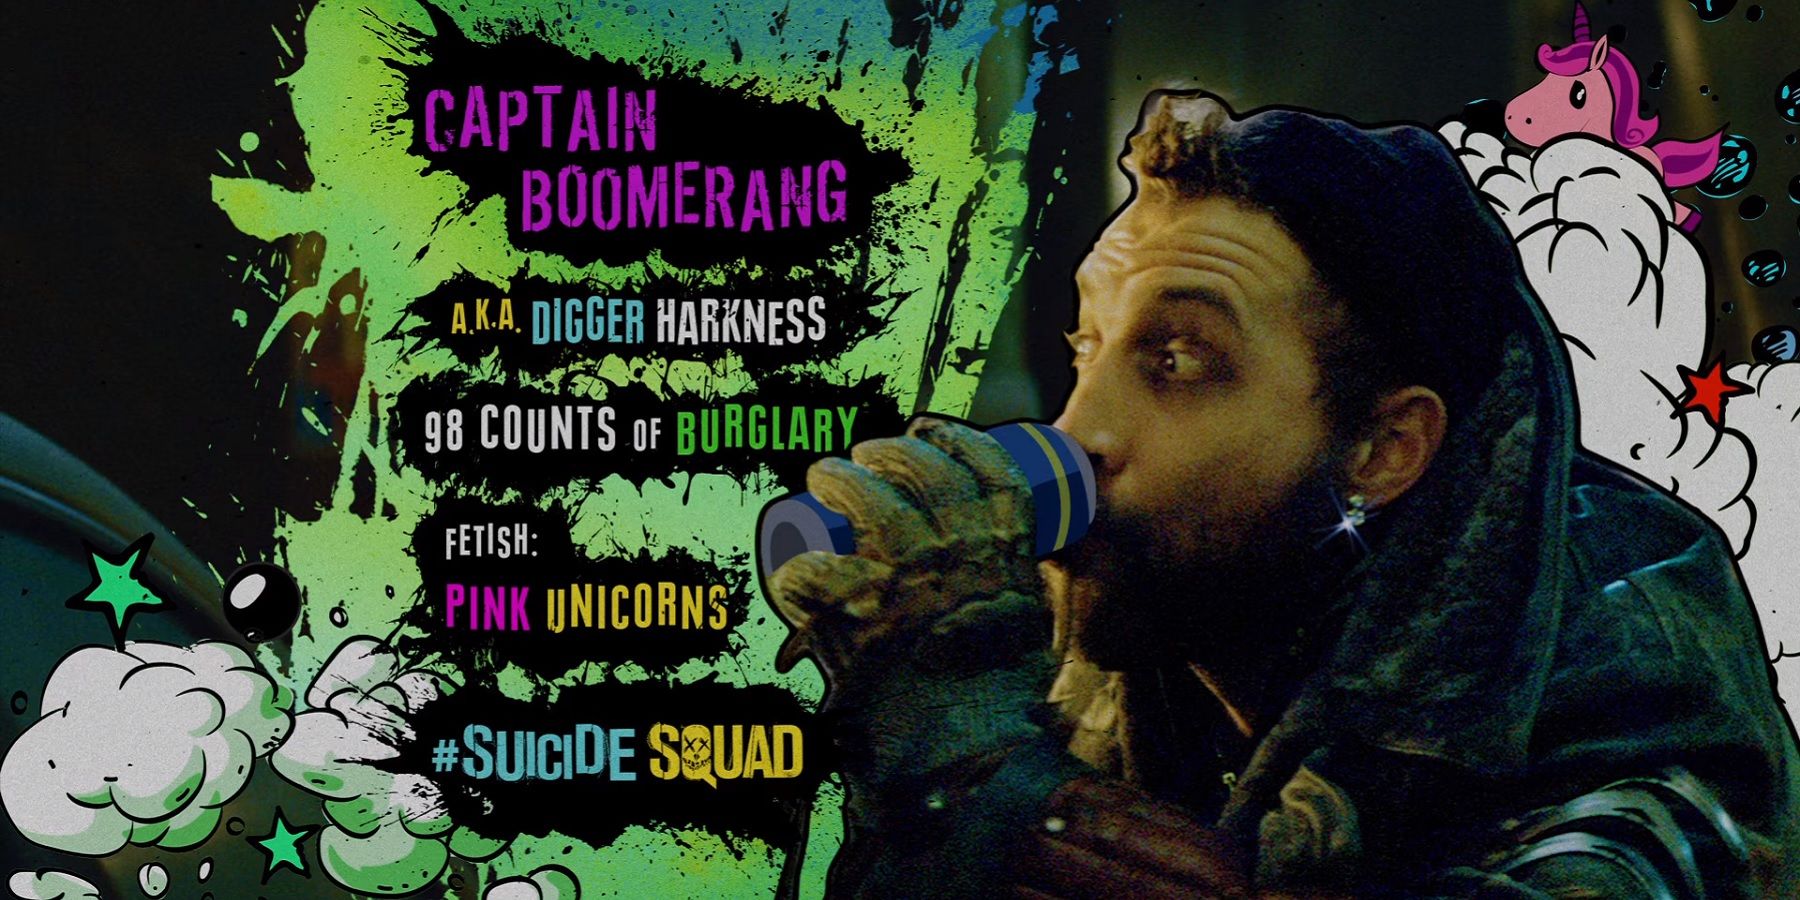 Suicide Squad - Captain Boomerang character breakdown